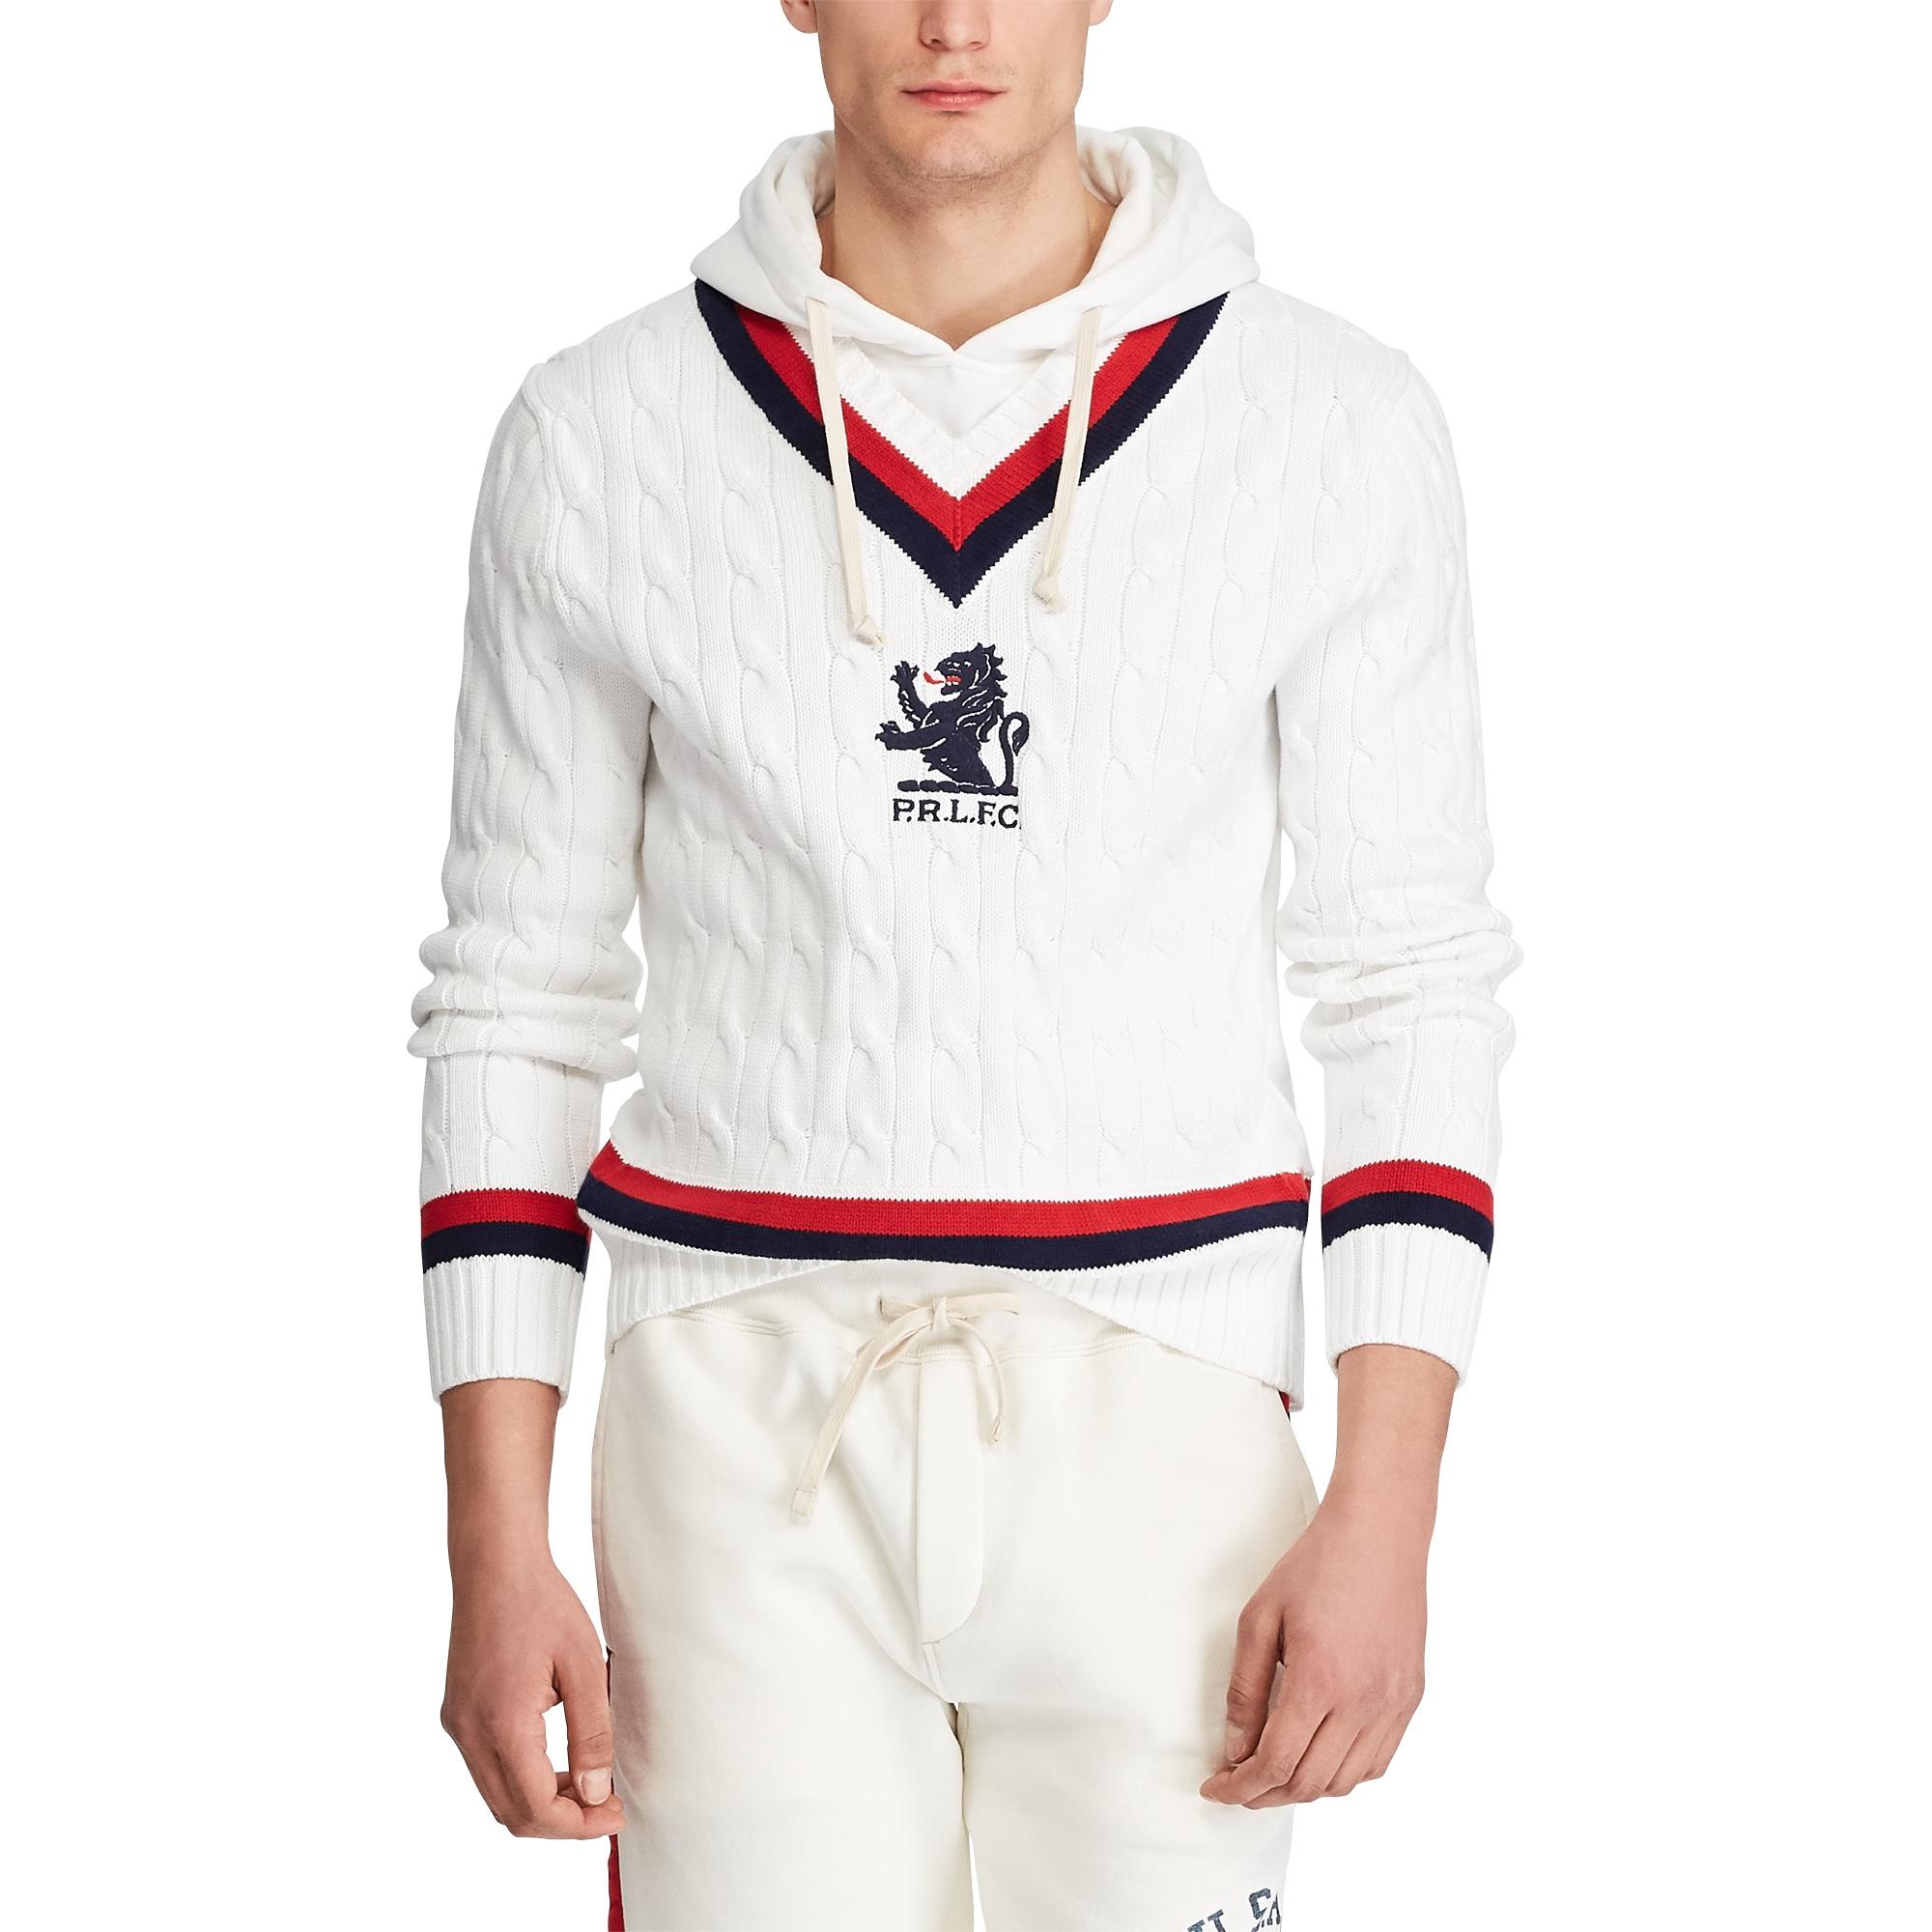 Polo Ralph Lauren Fleece Hooded Cricket Sweater in White for Men - Lyst